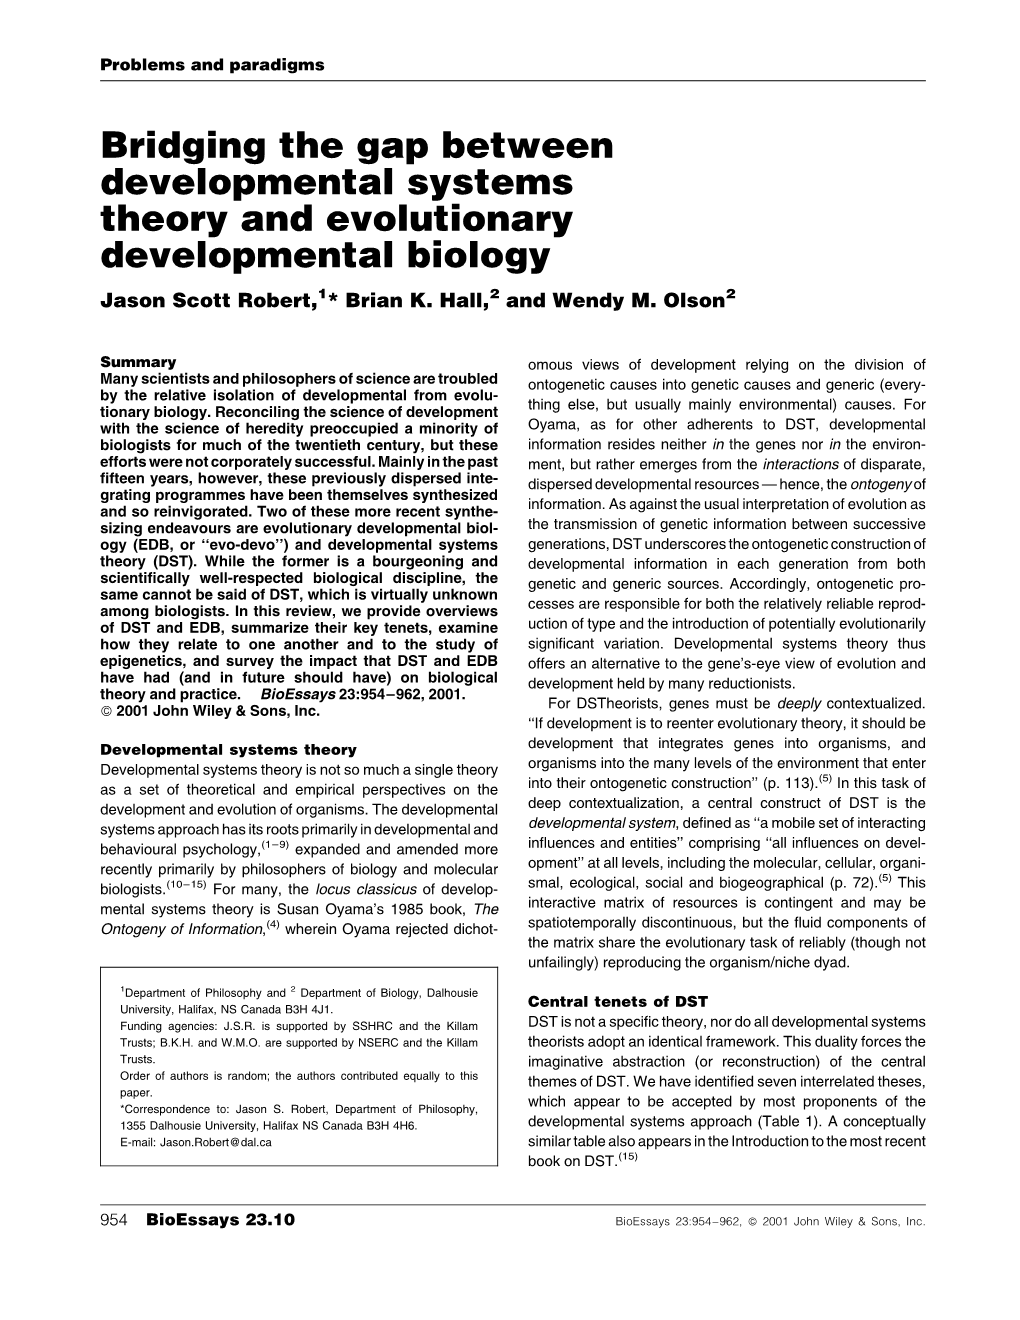 Bridging the Gap Between Developmental Systems Theory and Evolutionary Developmental Biology